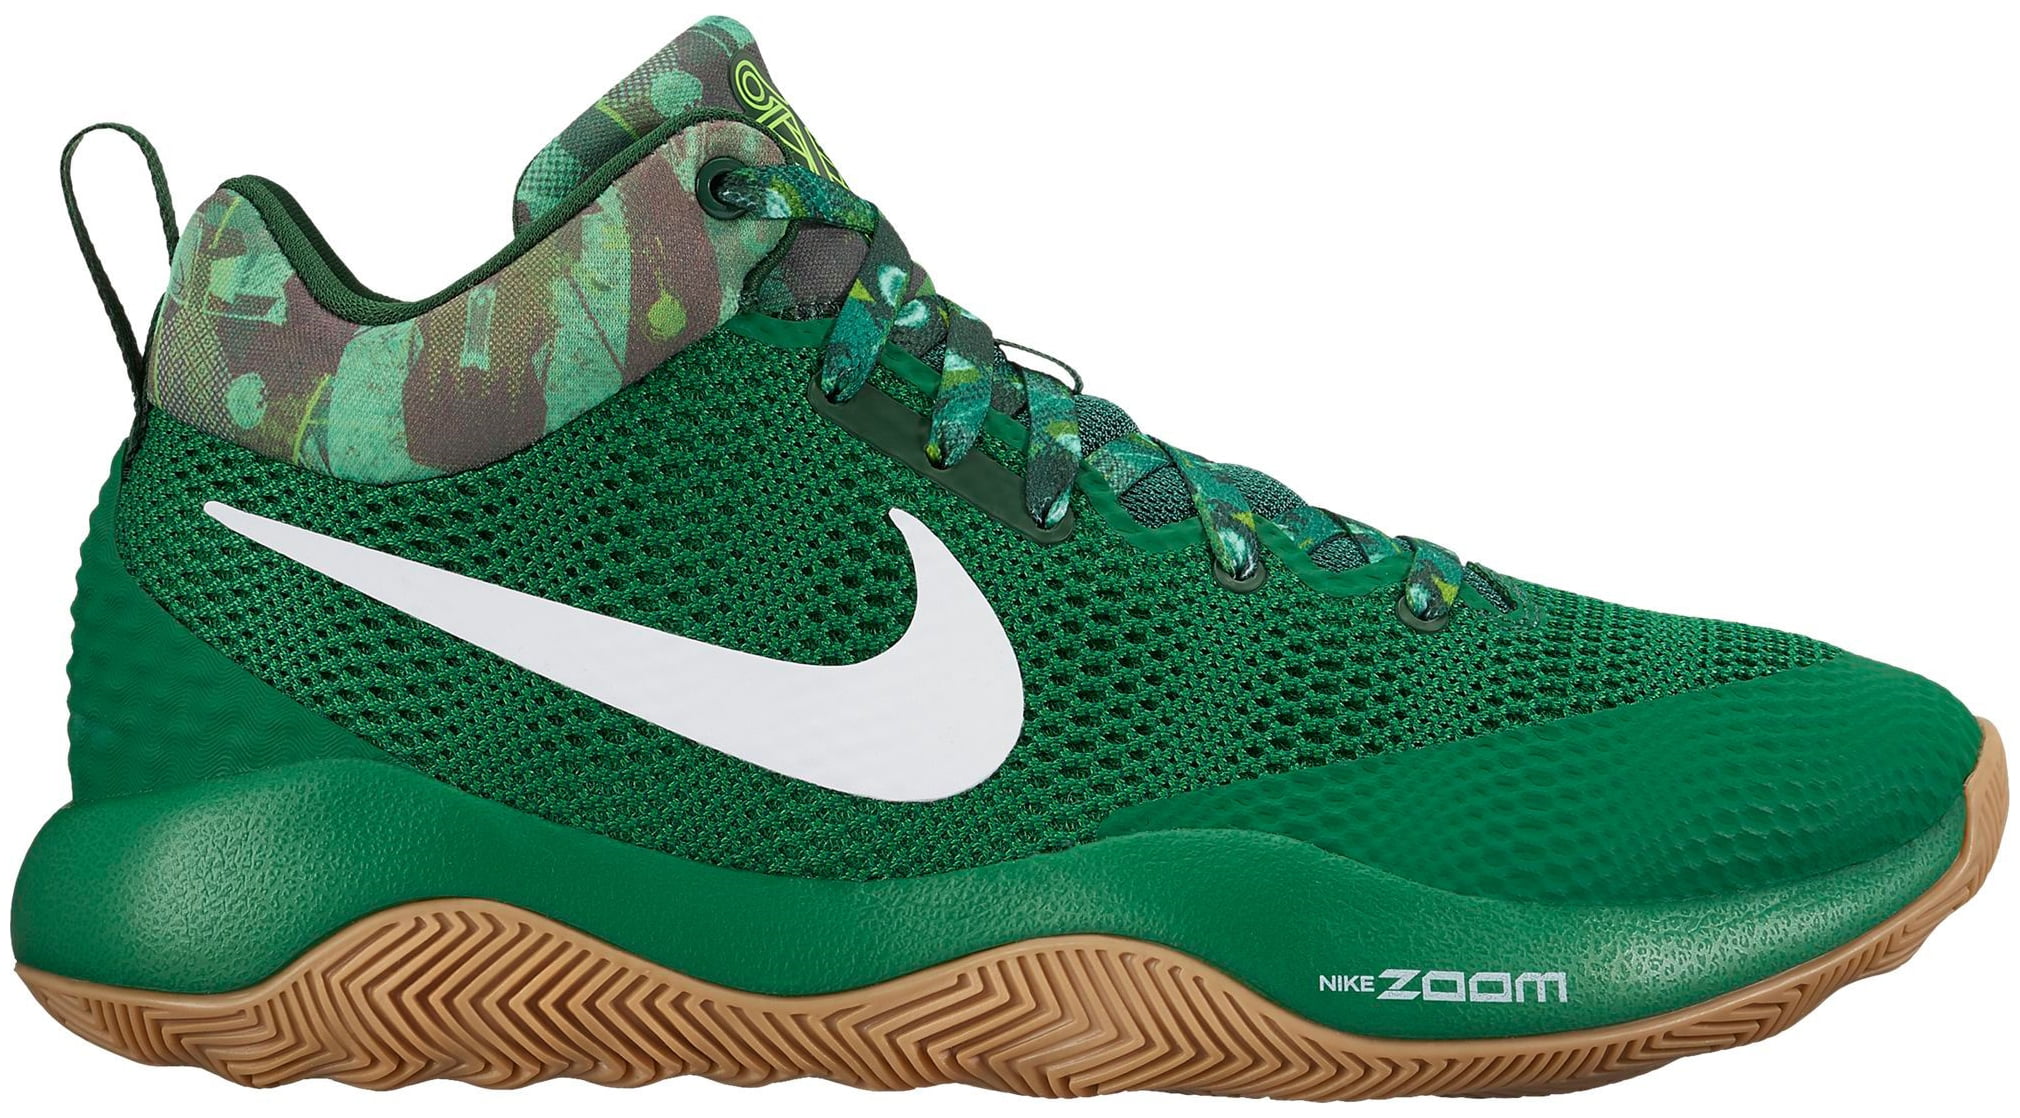 Correo aéreo Pinchazo Ropa Nike Men's Zoom Rev 2017 Basketball Shoes - Green/White - 10.5 - Walmart.com